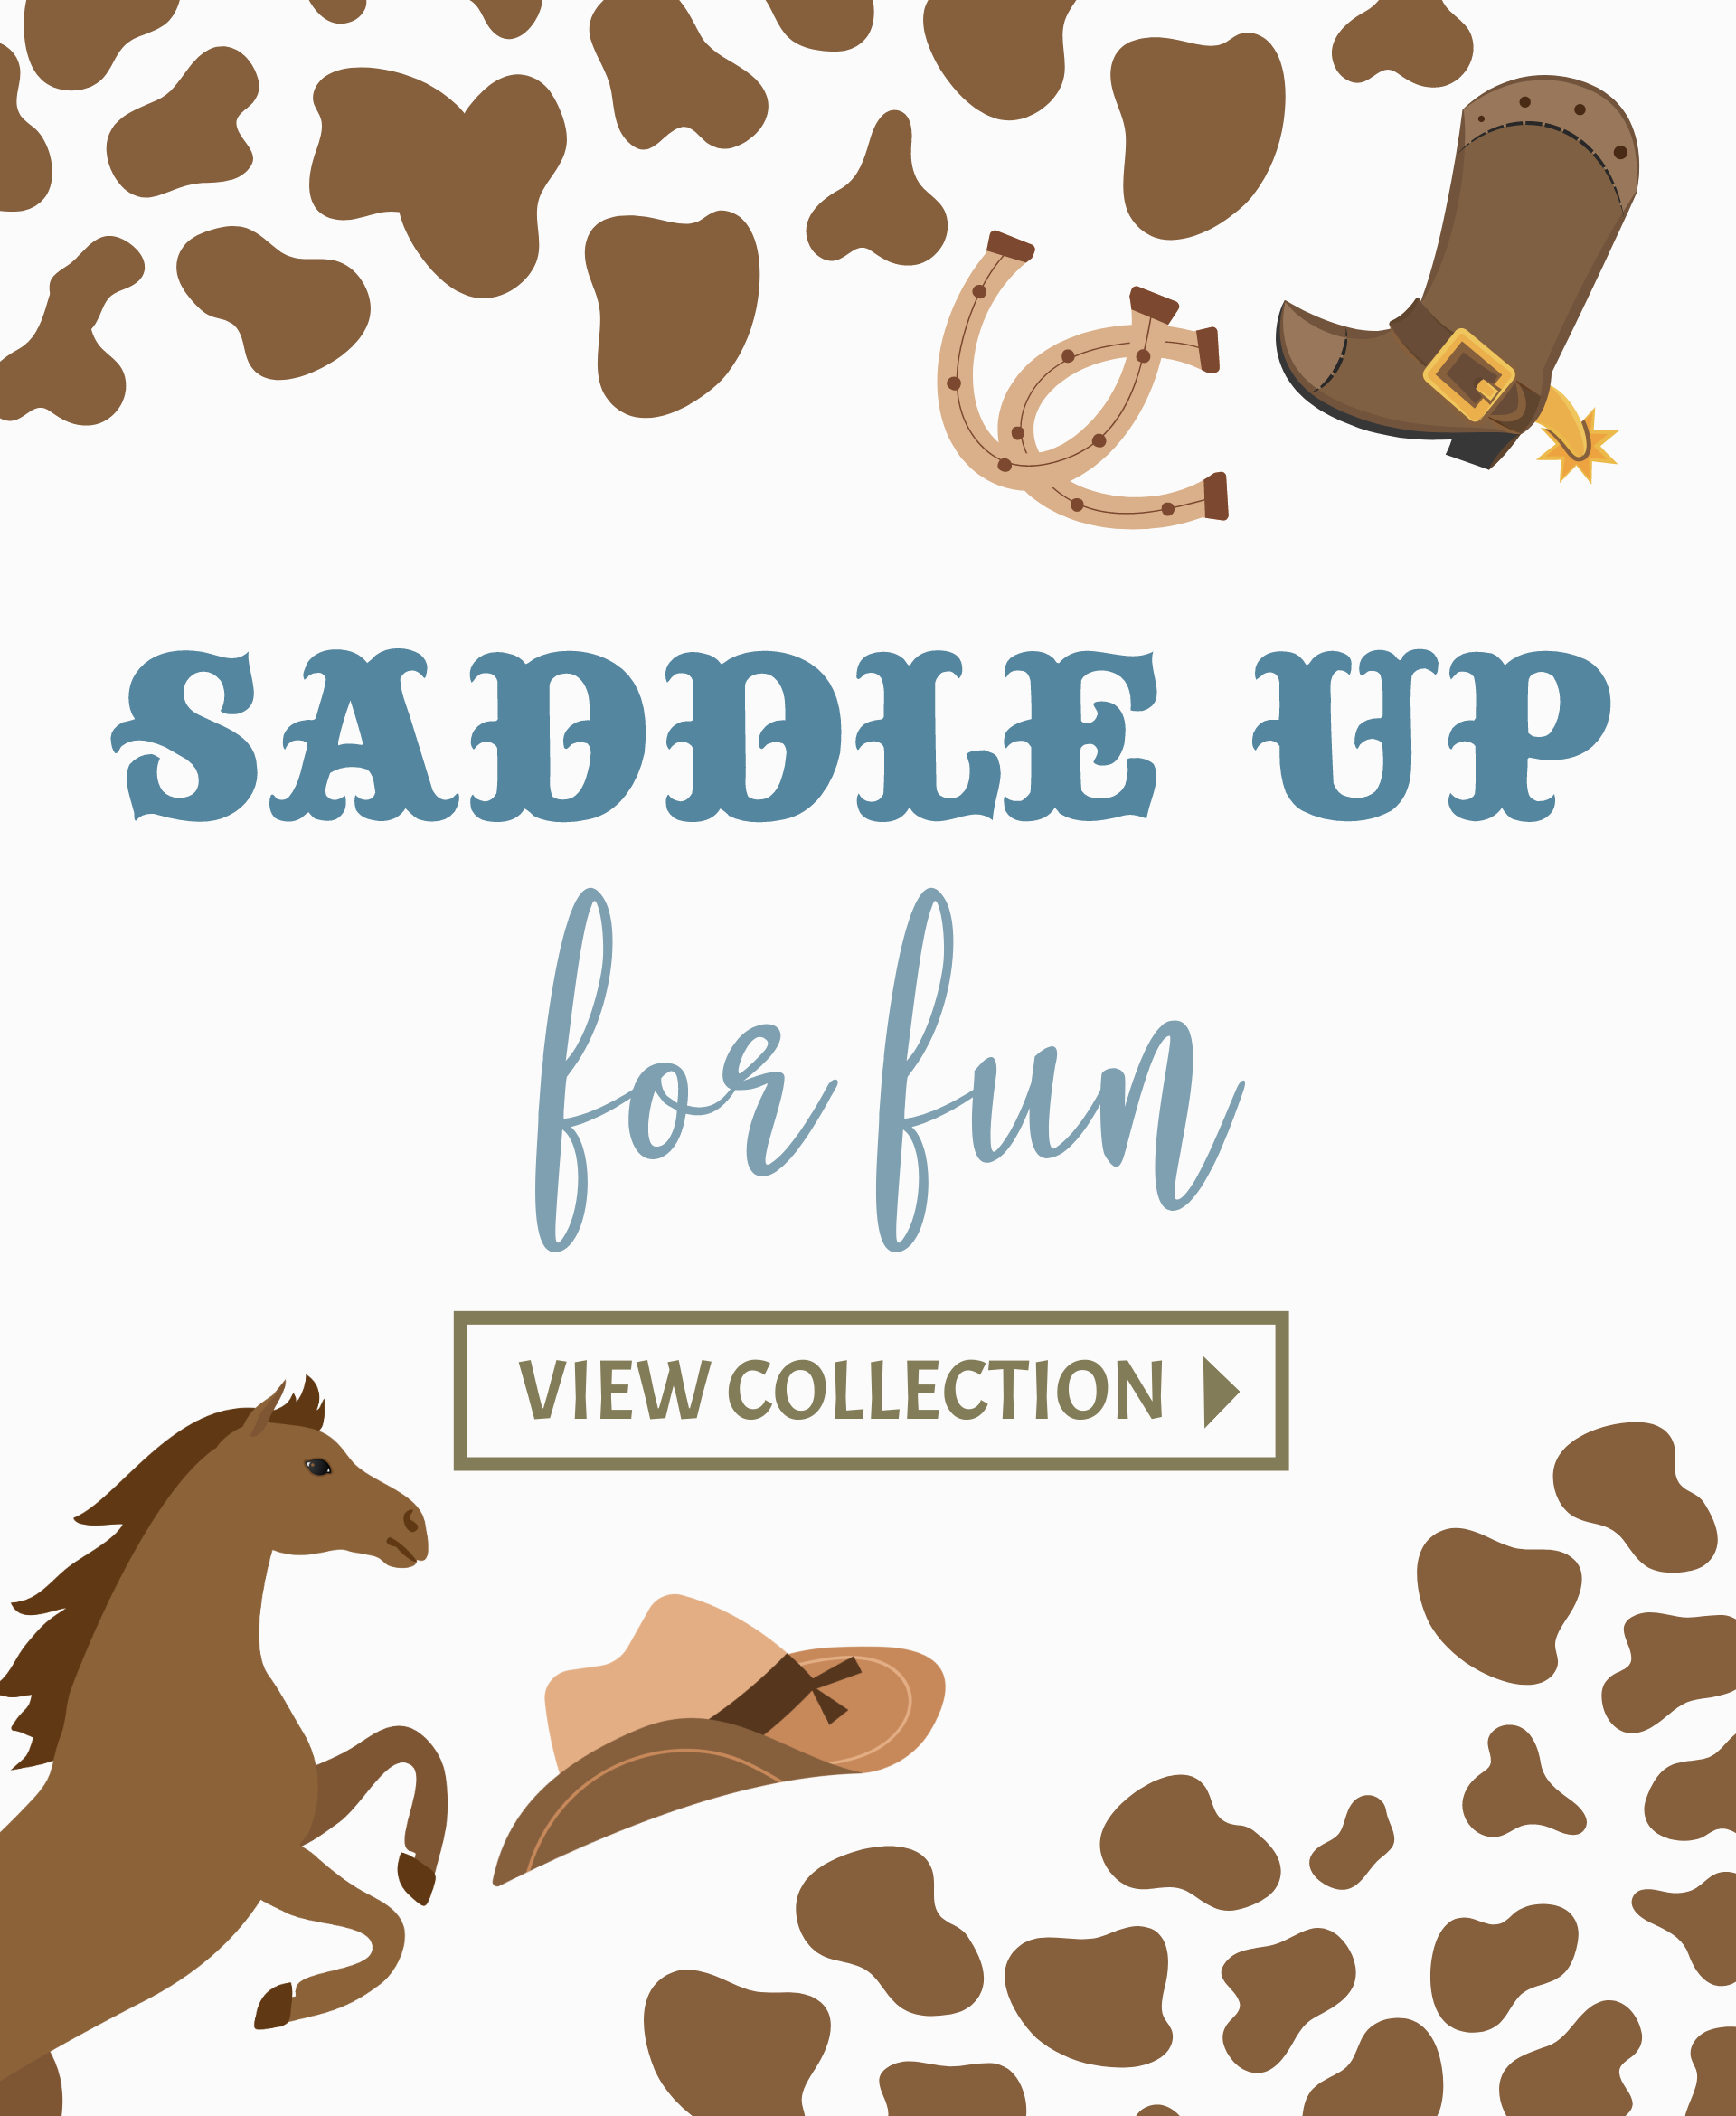 Saddle Up For Fun